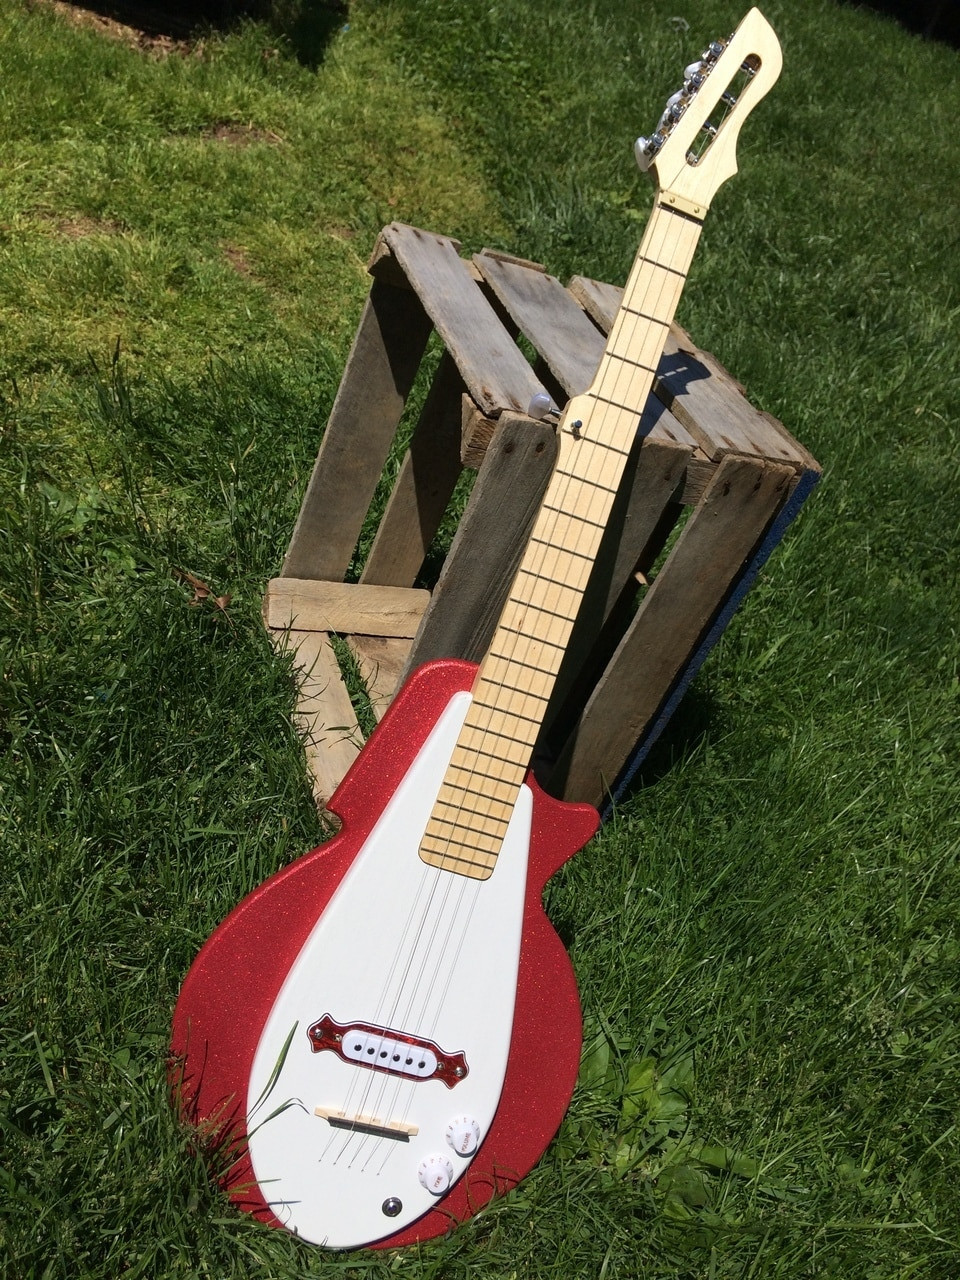 DIY Banjo Kit
 Build Your Own 5 String Electric Banjo Kit C B Gitty